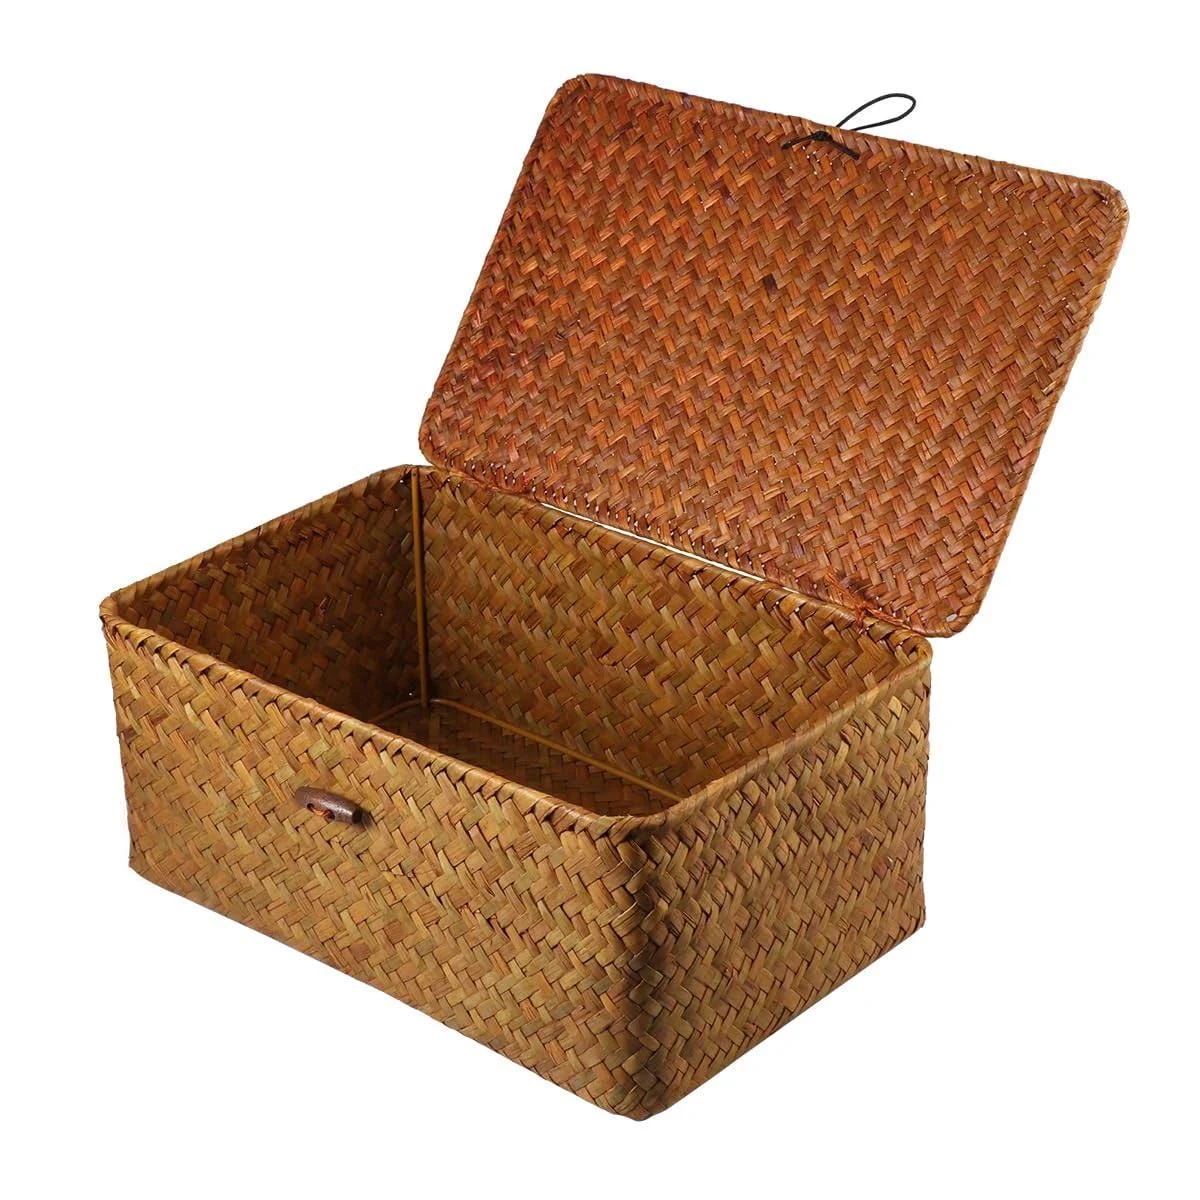 Seaweed Rattan Storage Basket with Lid | Image